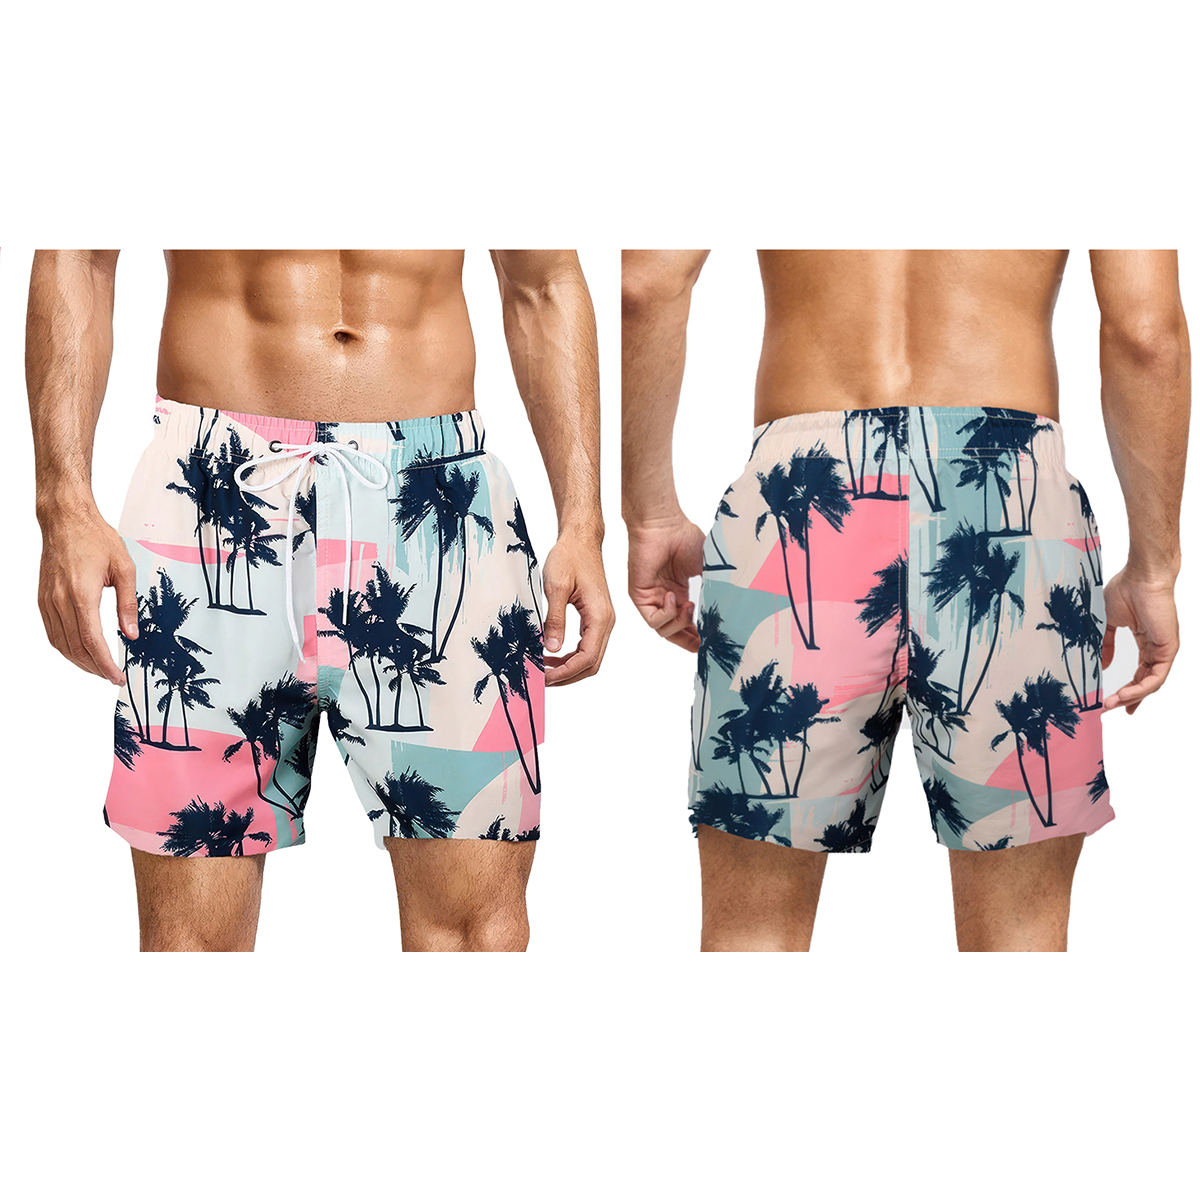 3-Pack: Men's Quick-Dry Solid & Printed Summer Beach Surf Board Swim Trunks Shorts - Medium, Solid